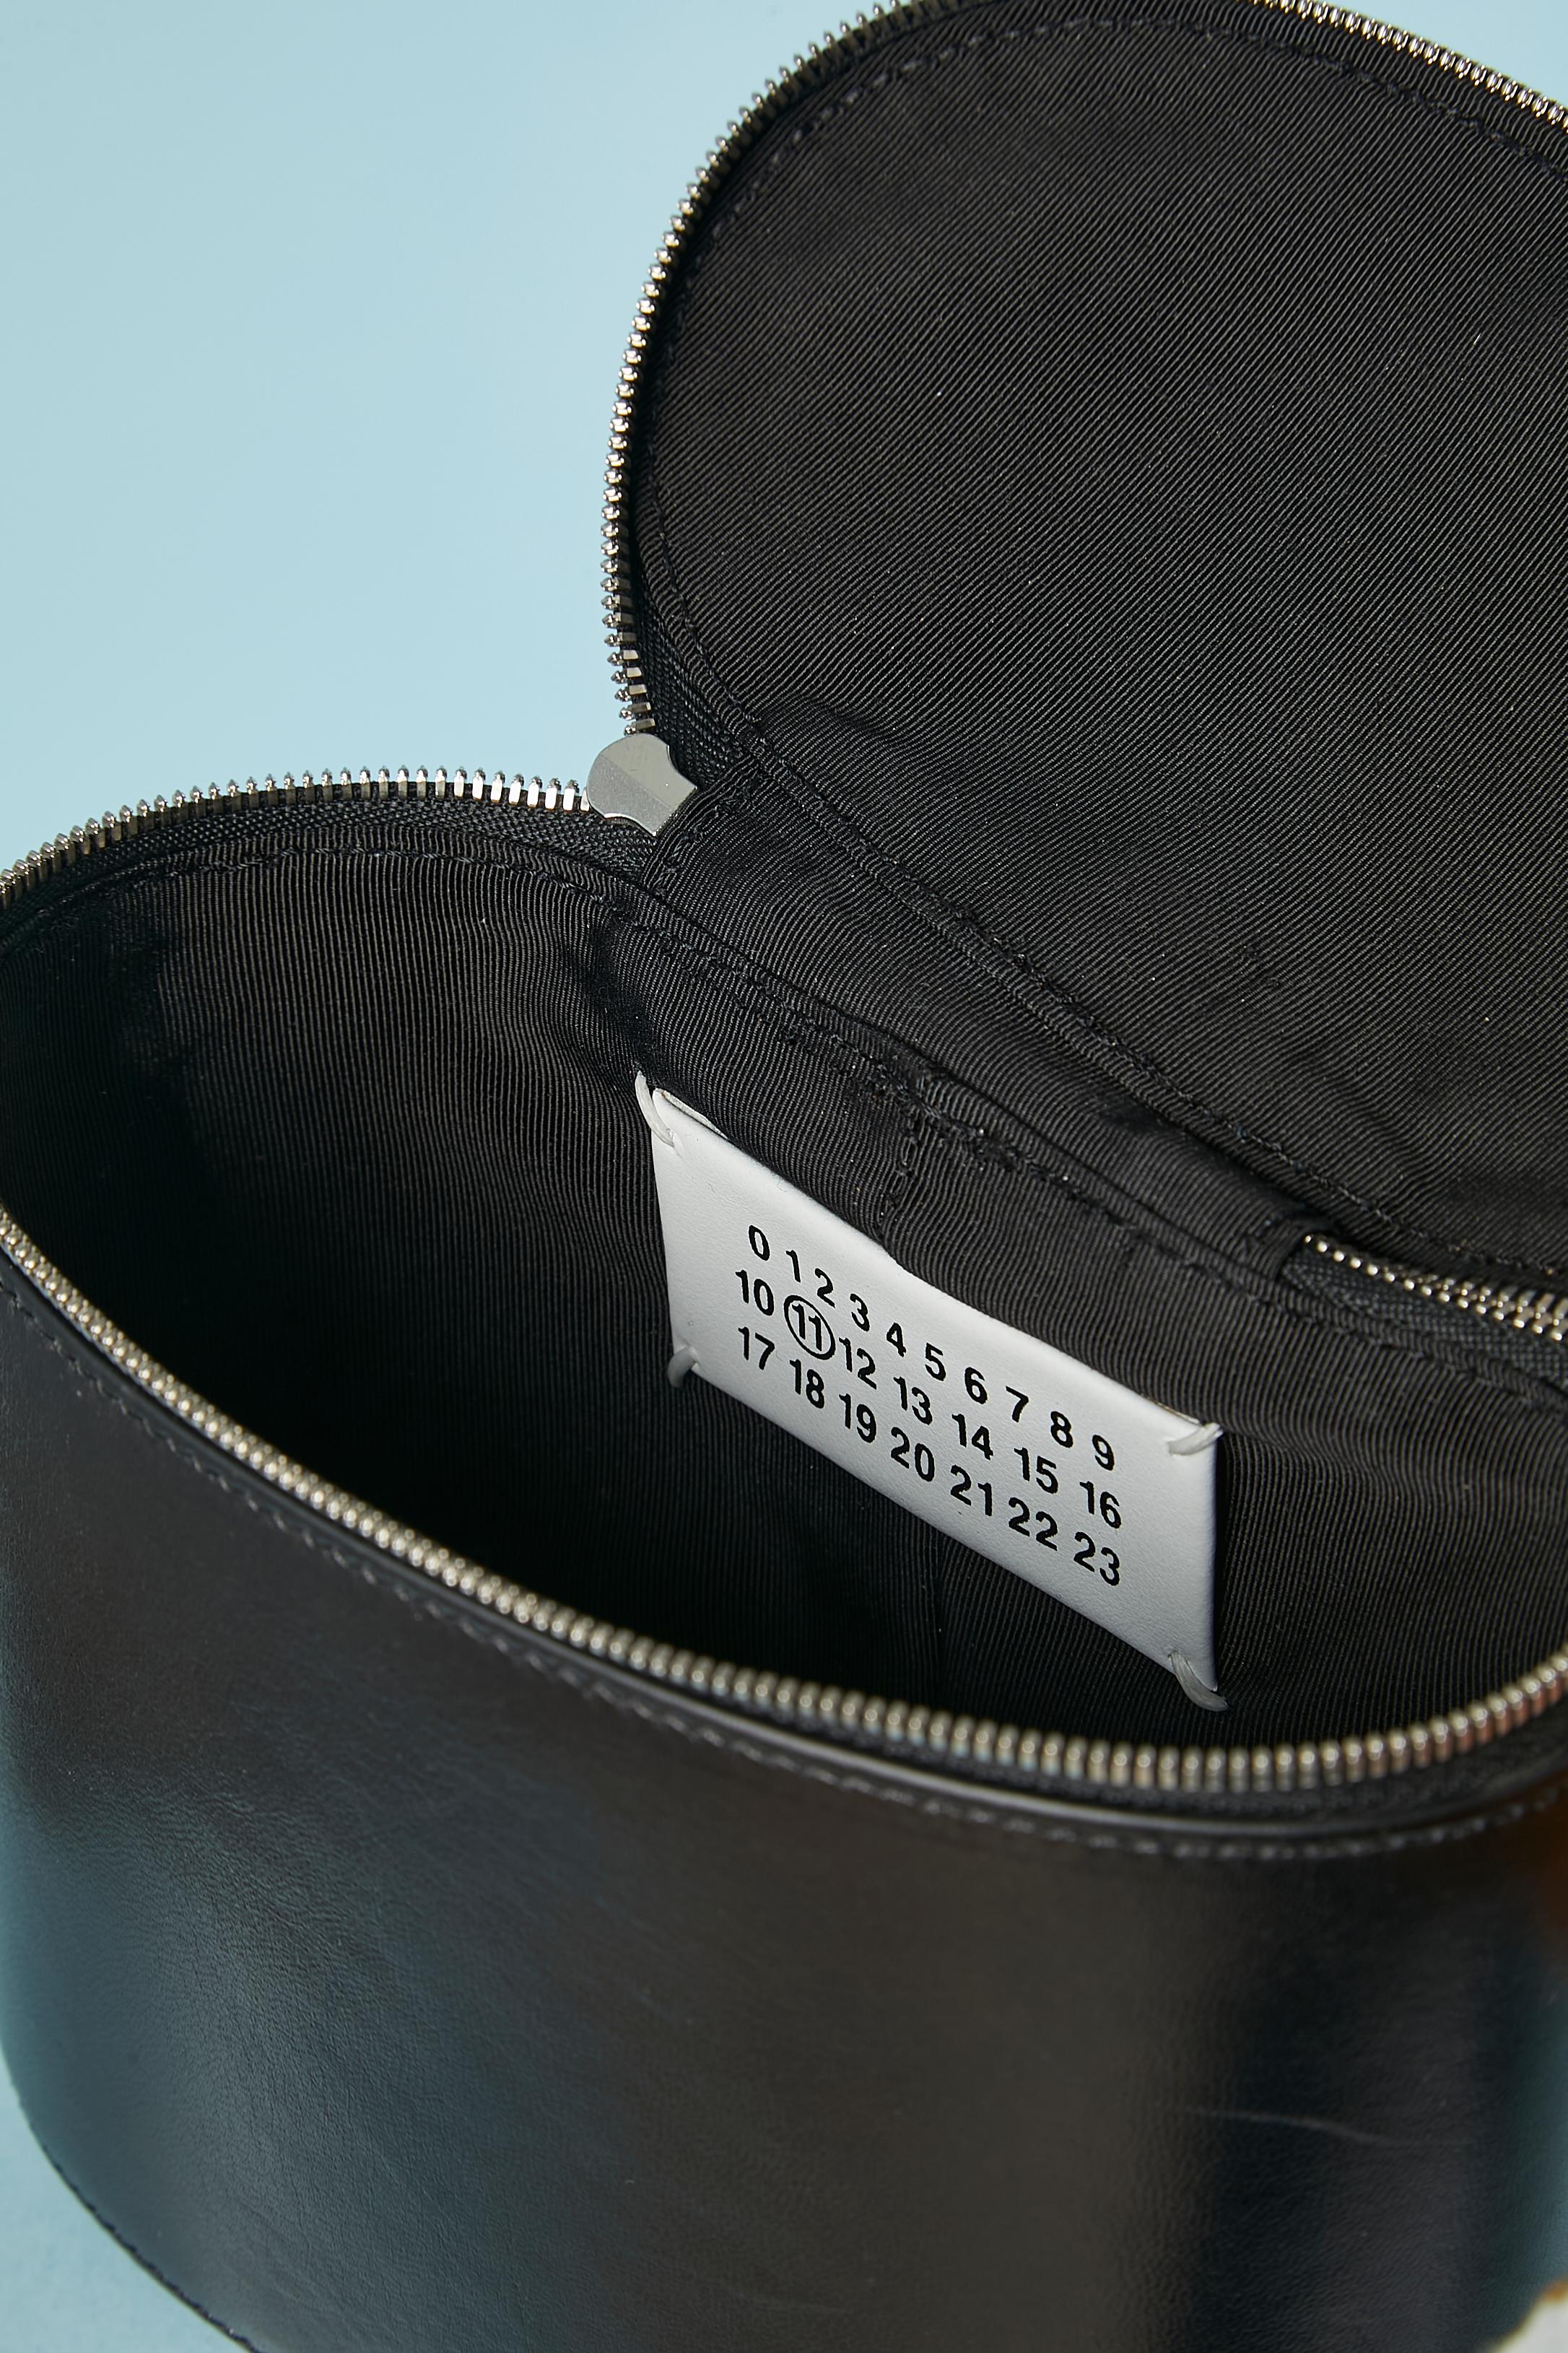 Black leather handbag 